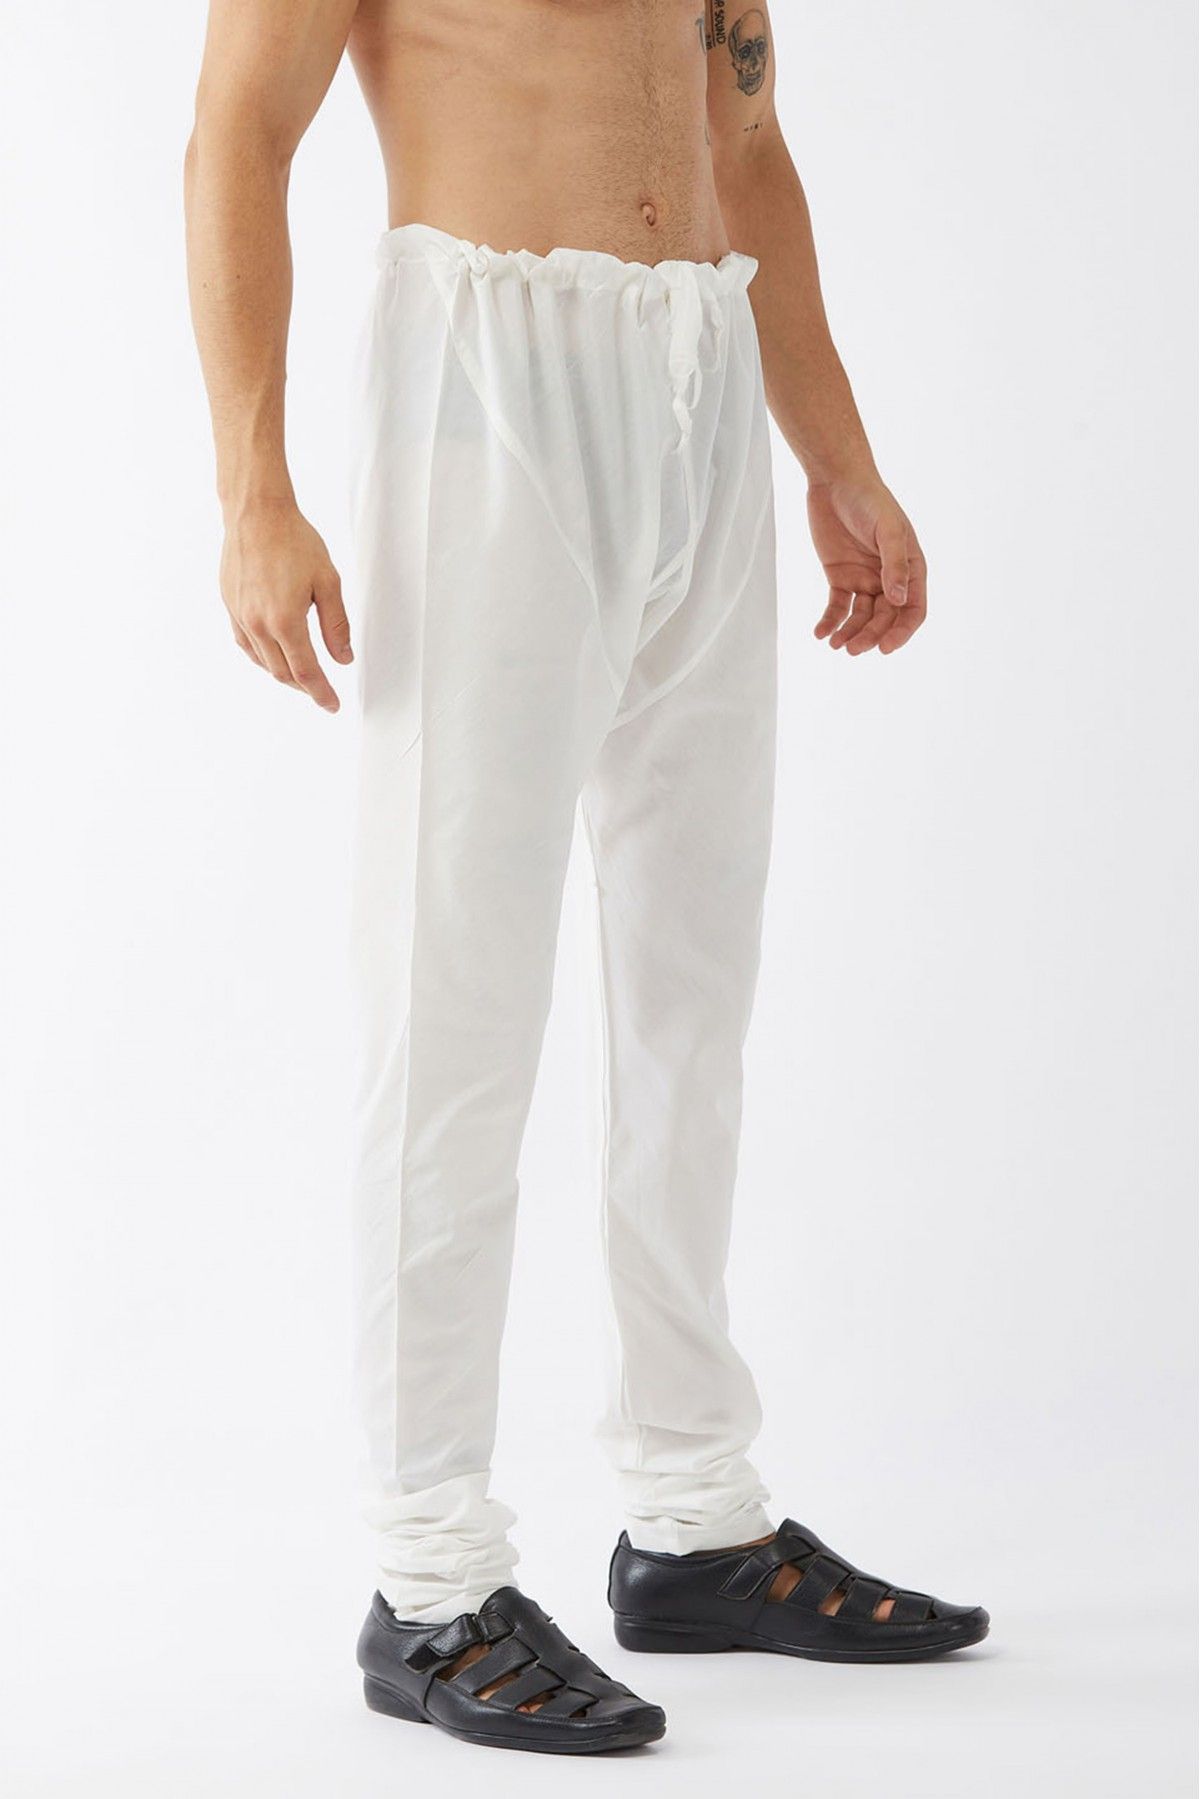 Cotton Blend Festival Wear Pajama In White Colour - BM4351947